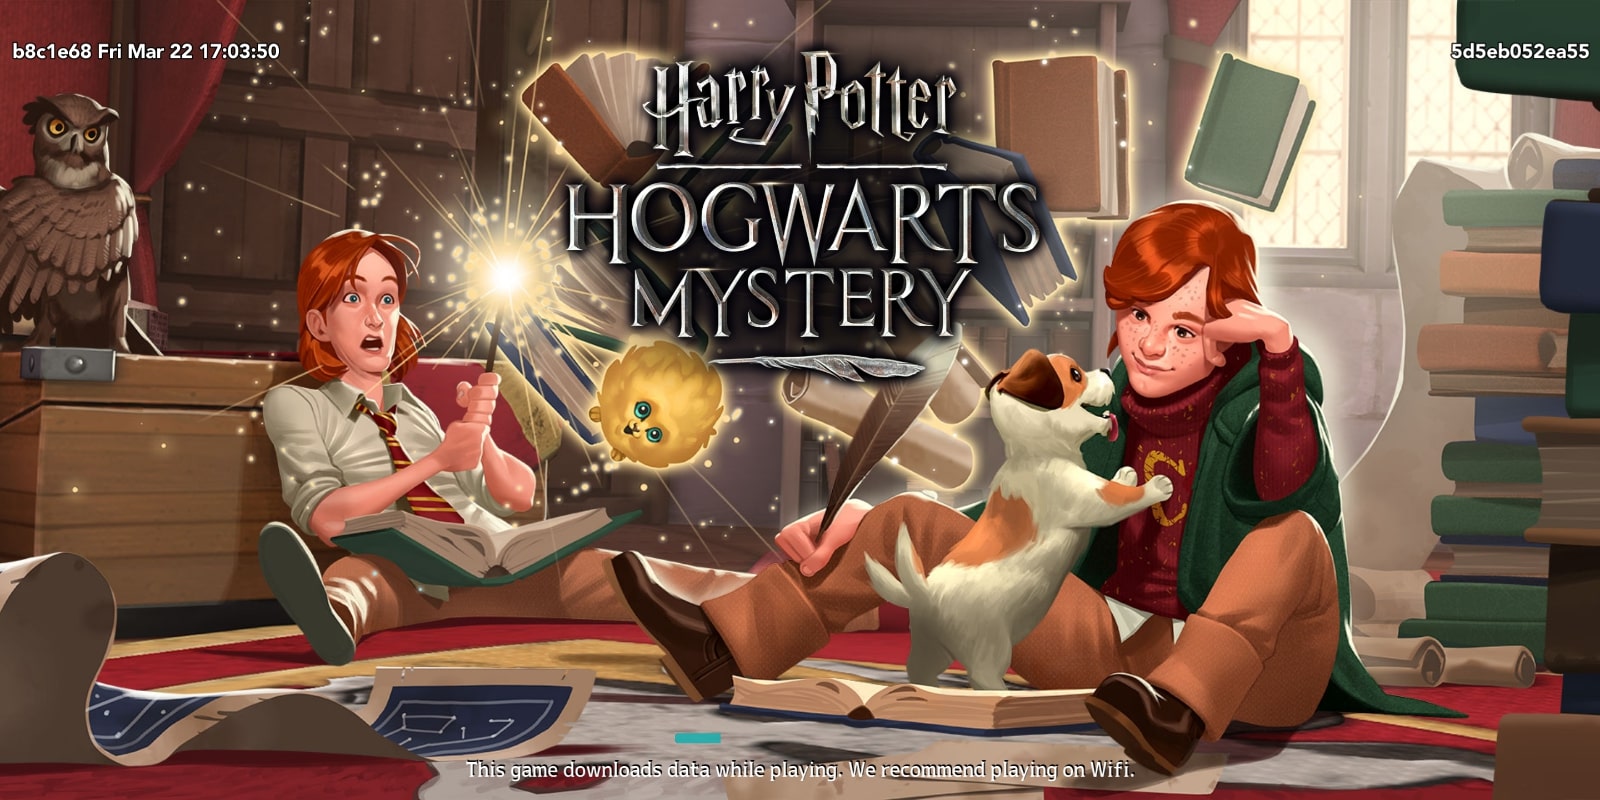 https://www.androidauthority.com/wp-content/uploads/2019/04/harry-potter-hogwarts-mystery-tips-header.jpg